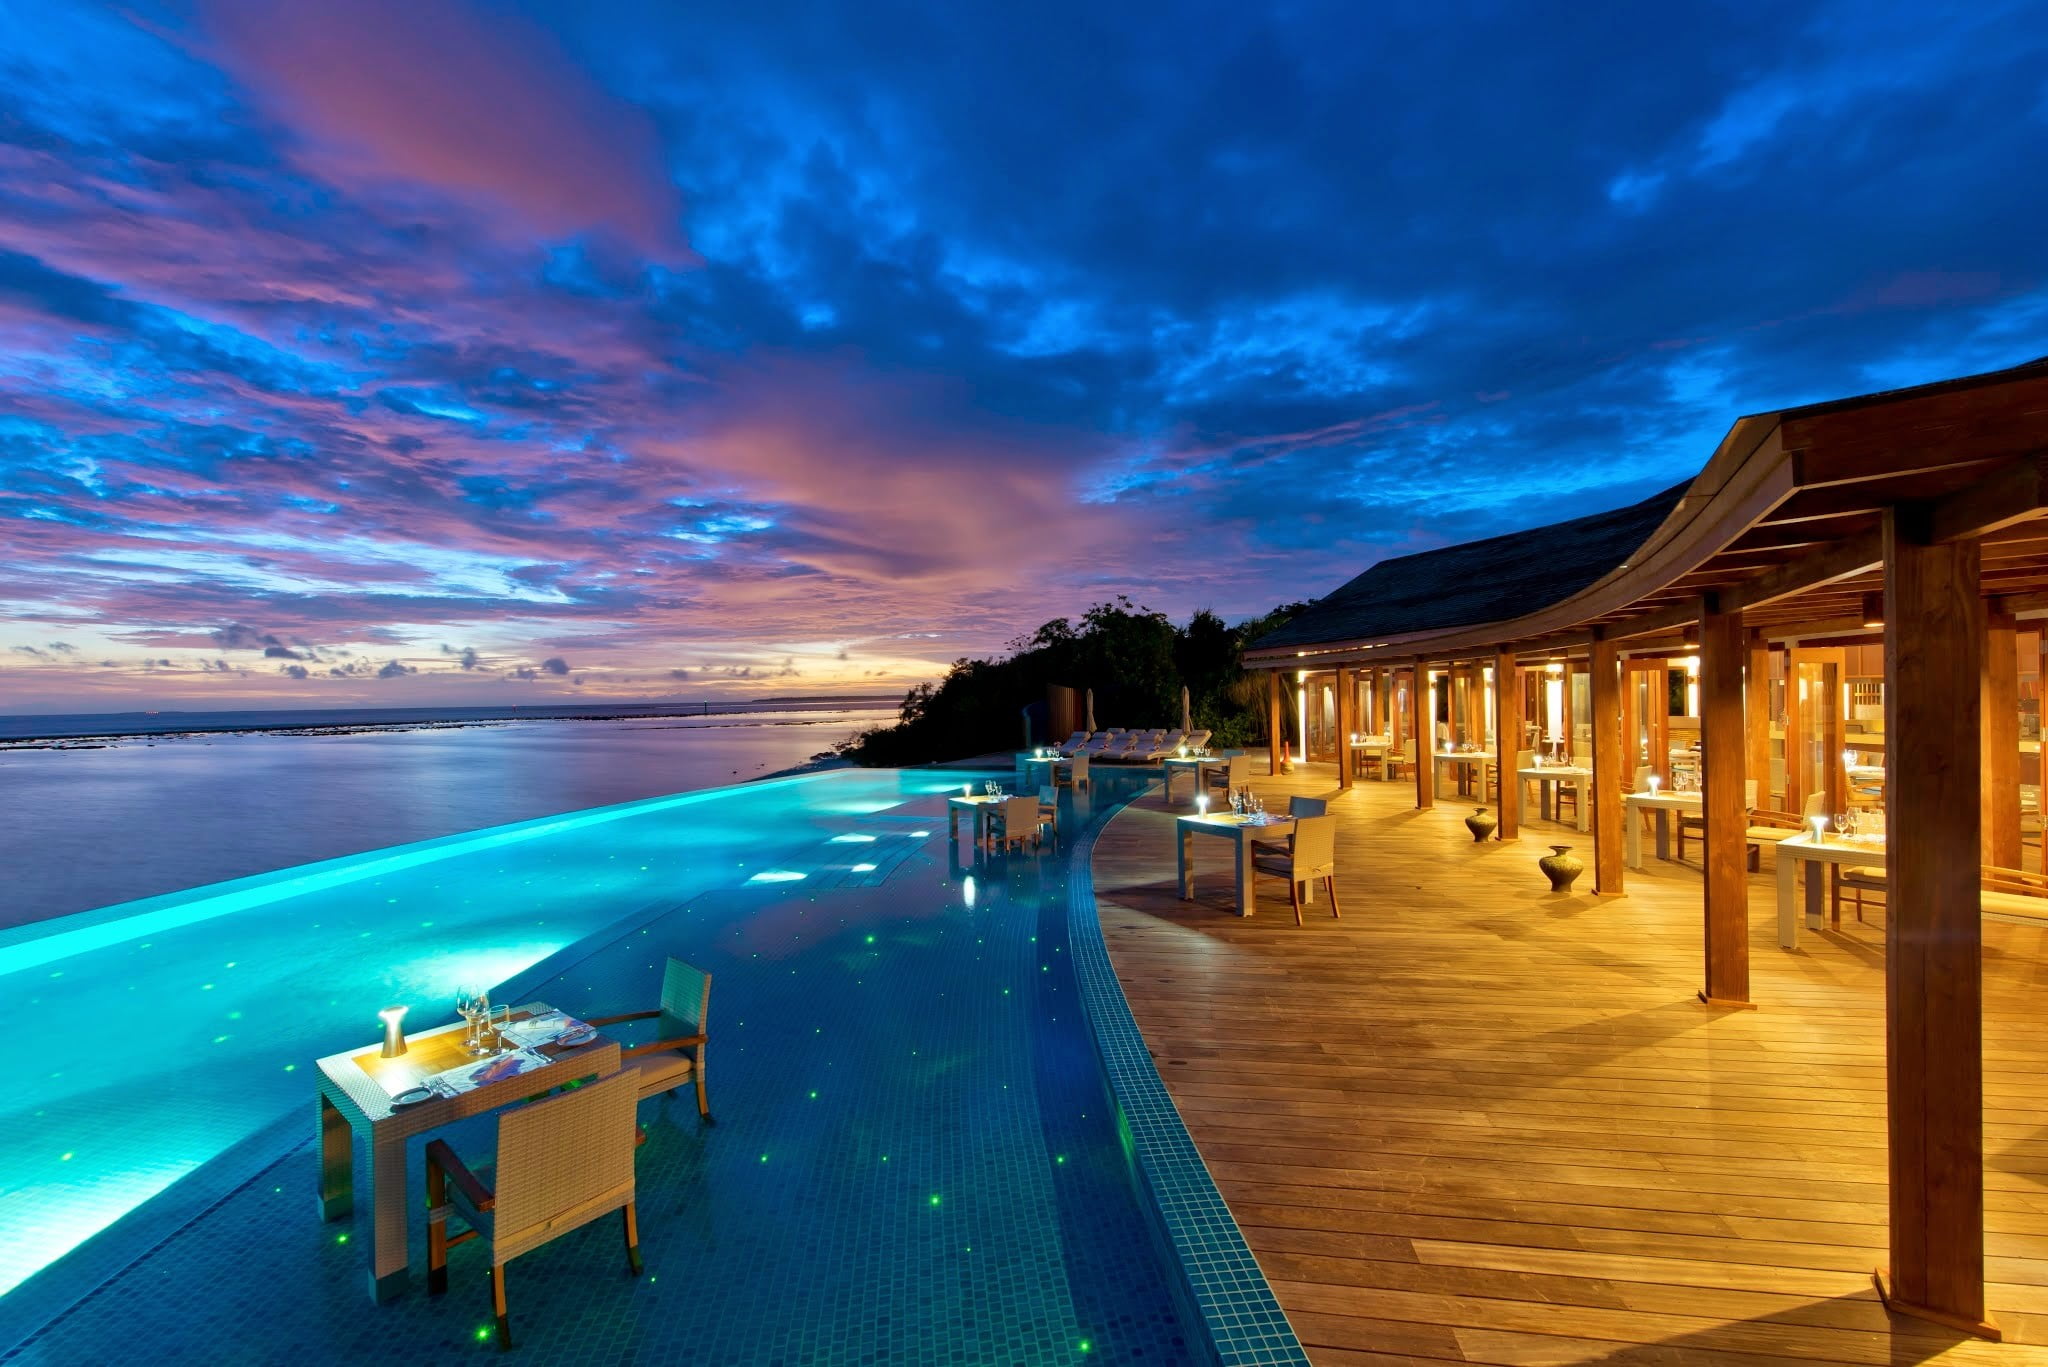 white metal table, holiday, sunset, resort, sea, swimming pool